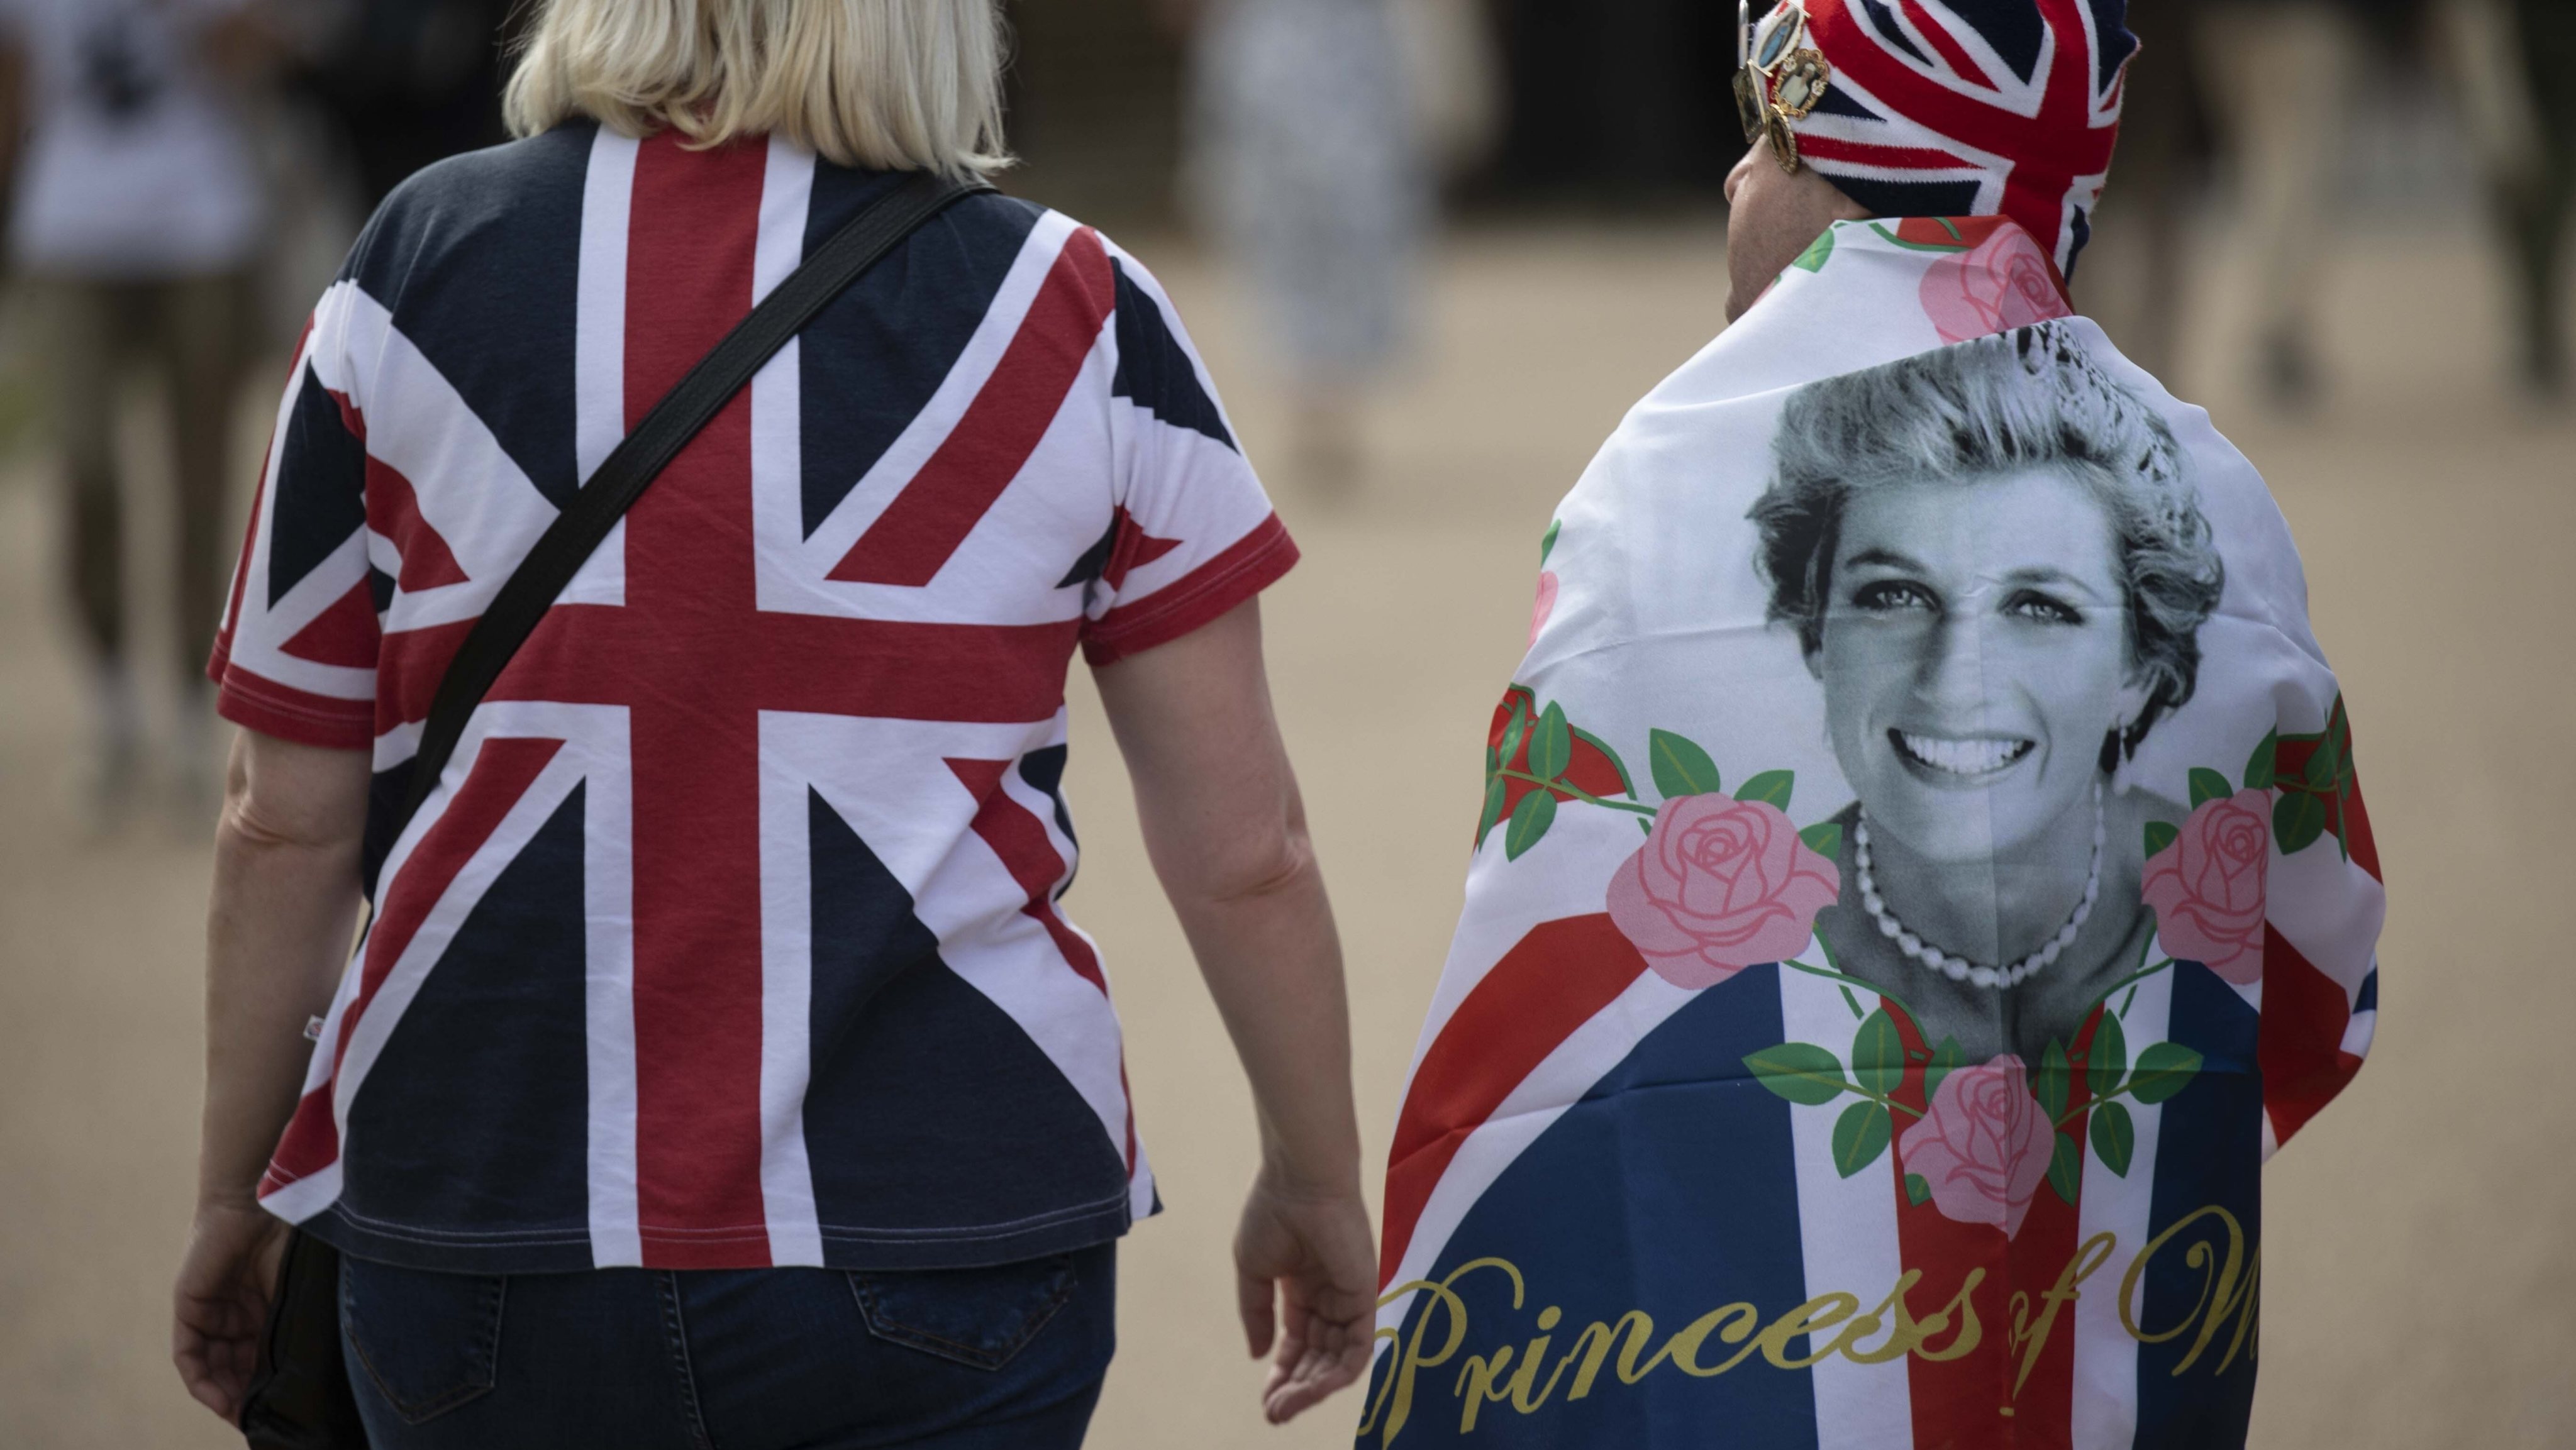 25th death anniversary of Princess Diana